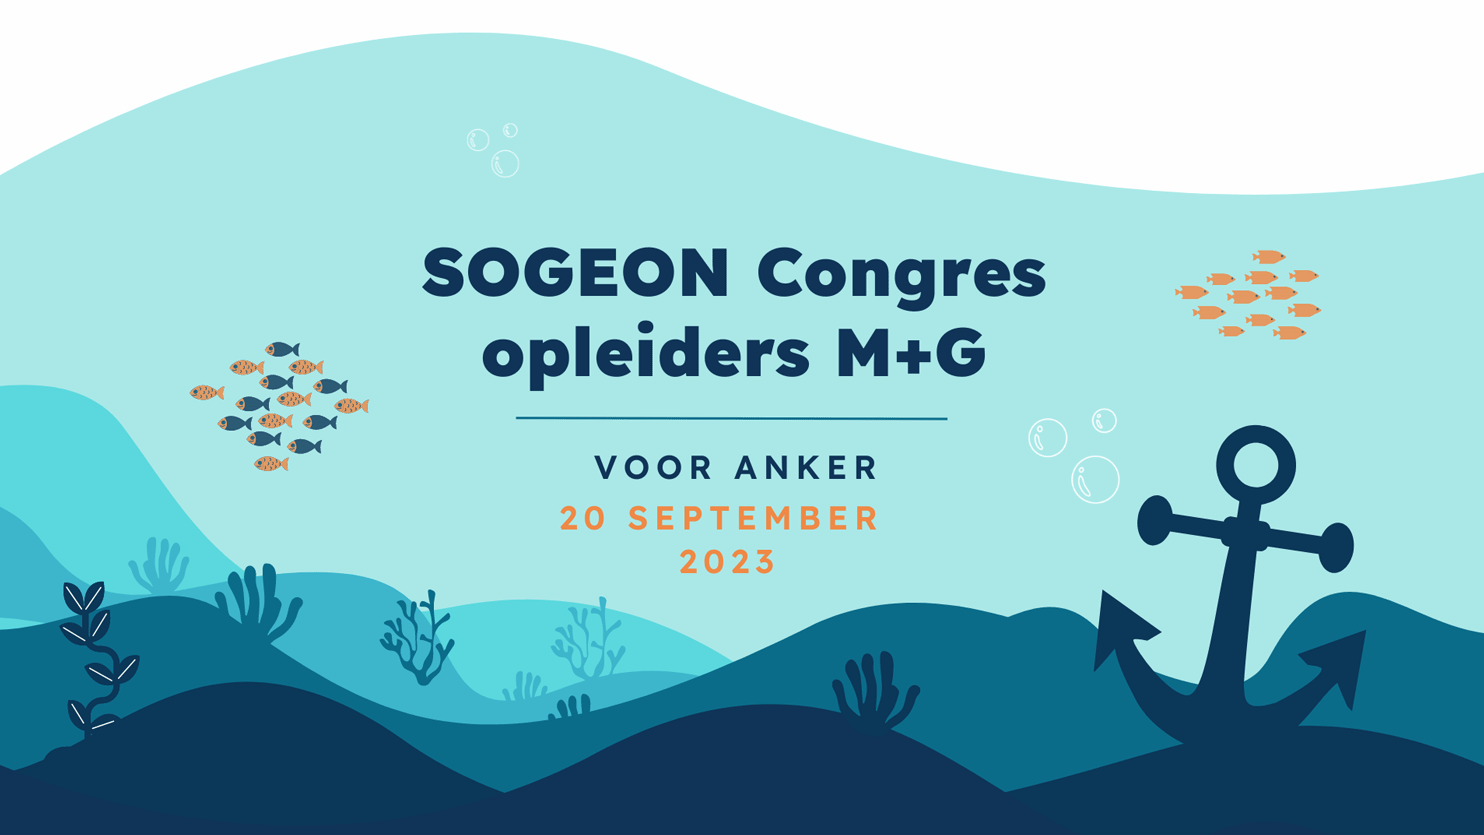 SOGEON Congres opleiders M+G 20 september 2023